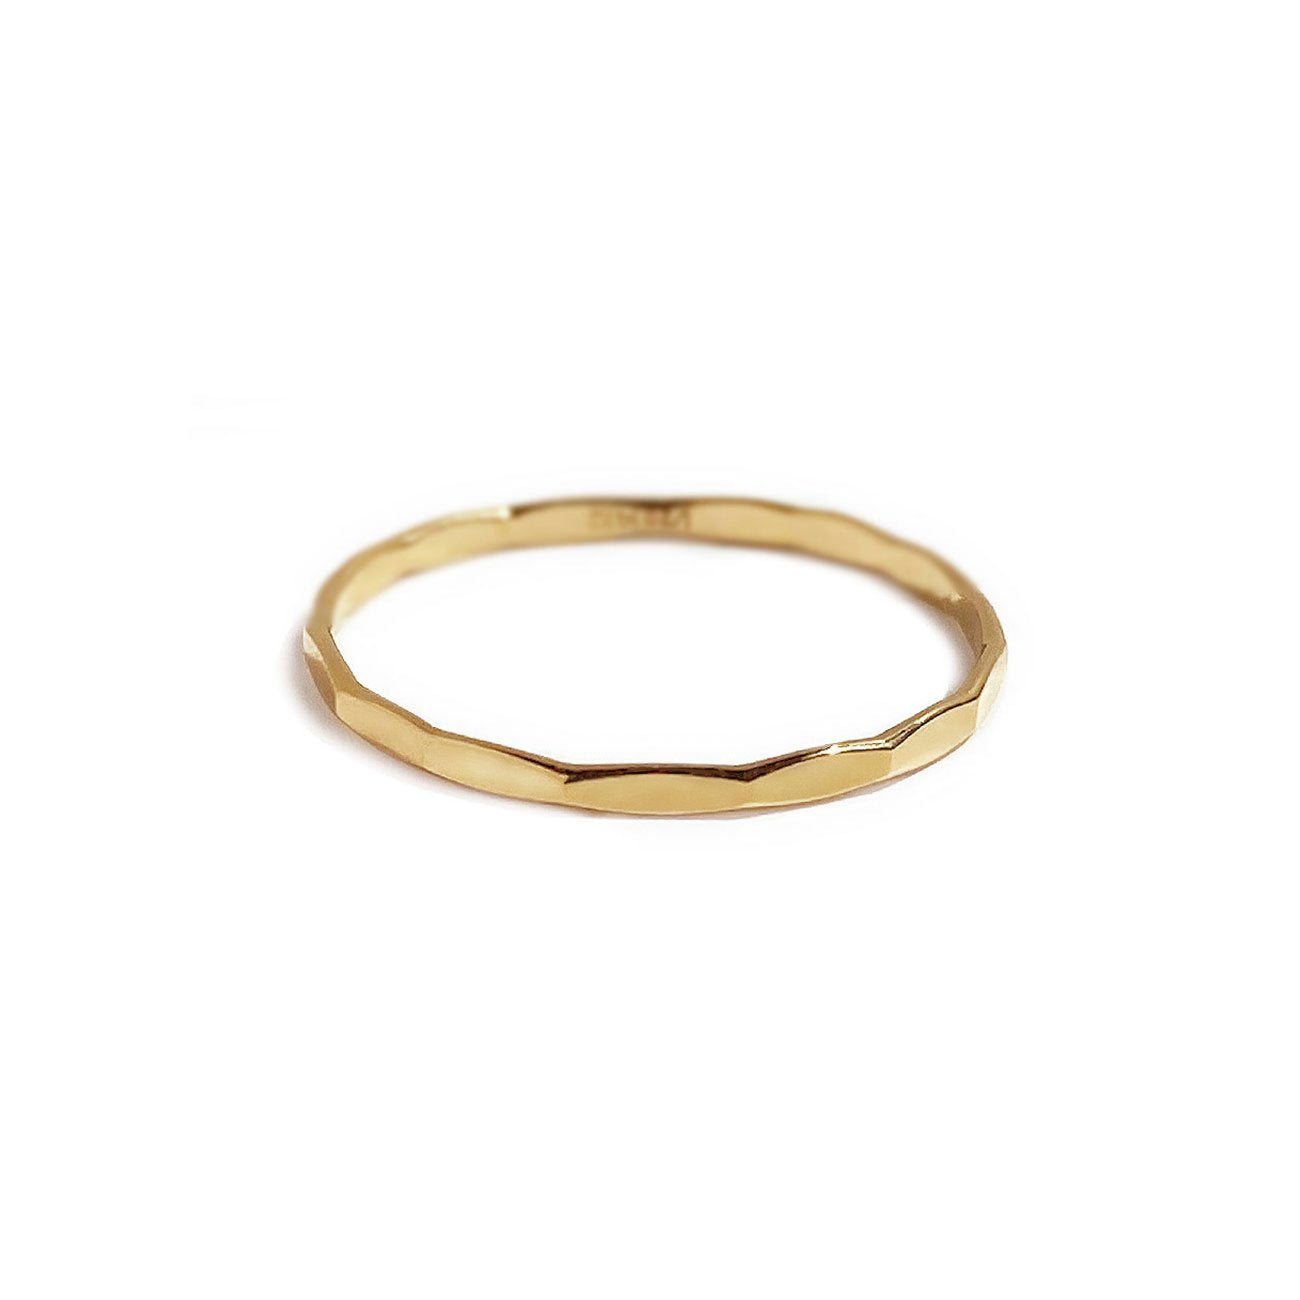 Designer Thin Gold Wedding Ring with Diamonds – Hozoni Designs